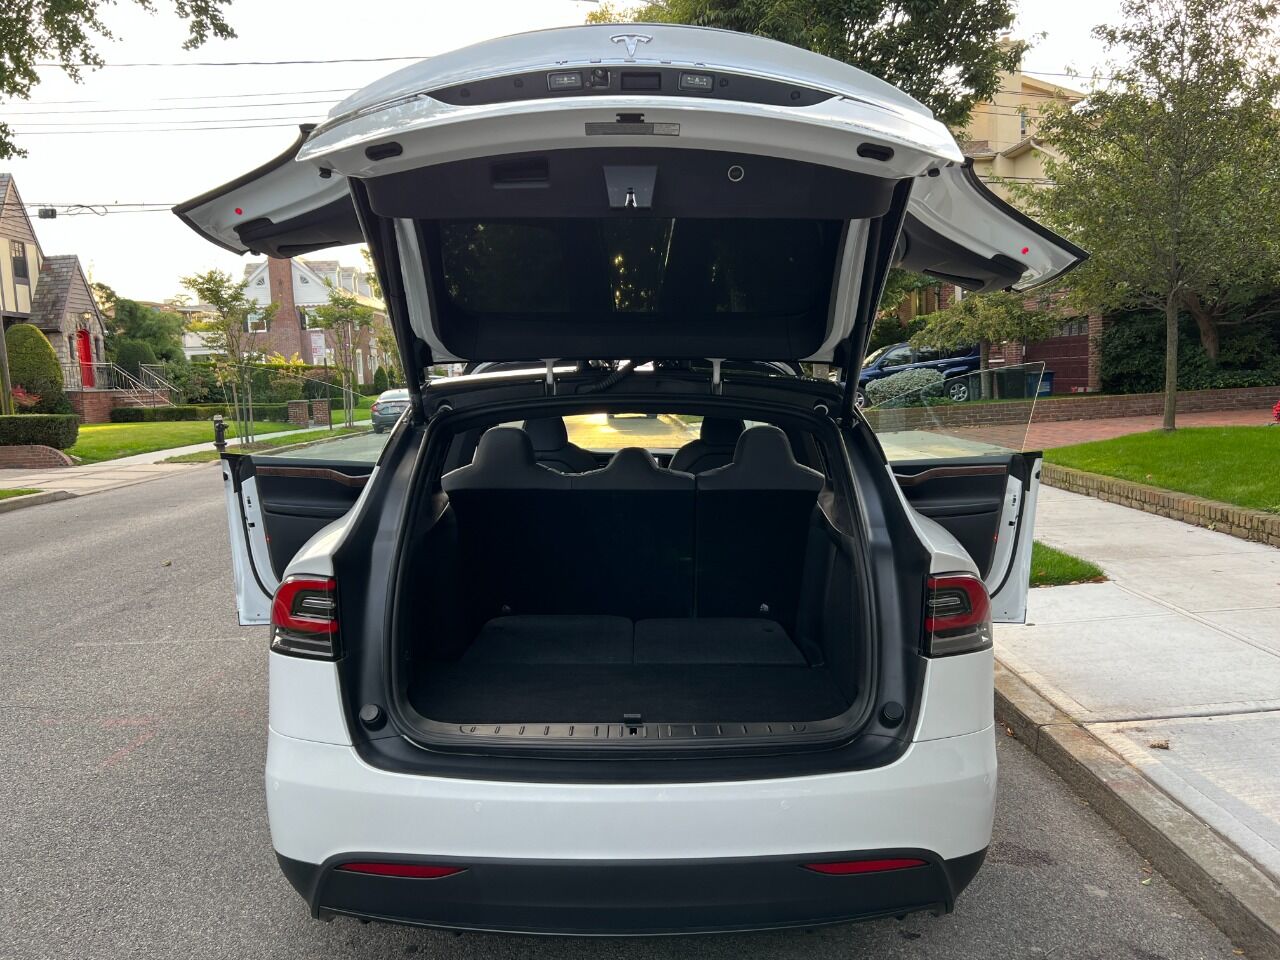 2020 TESLA Model X SUV / Crossover - $79,900